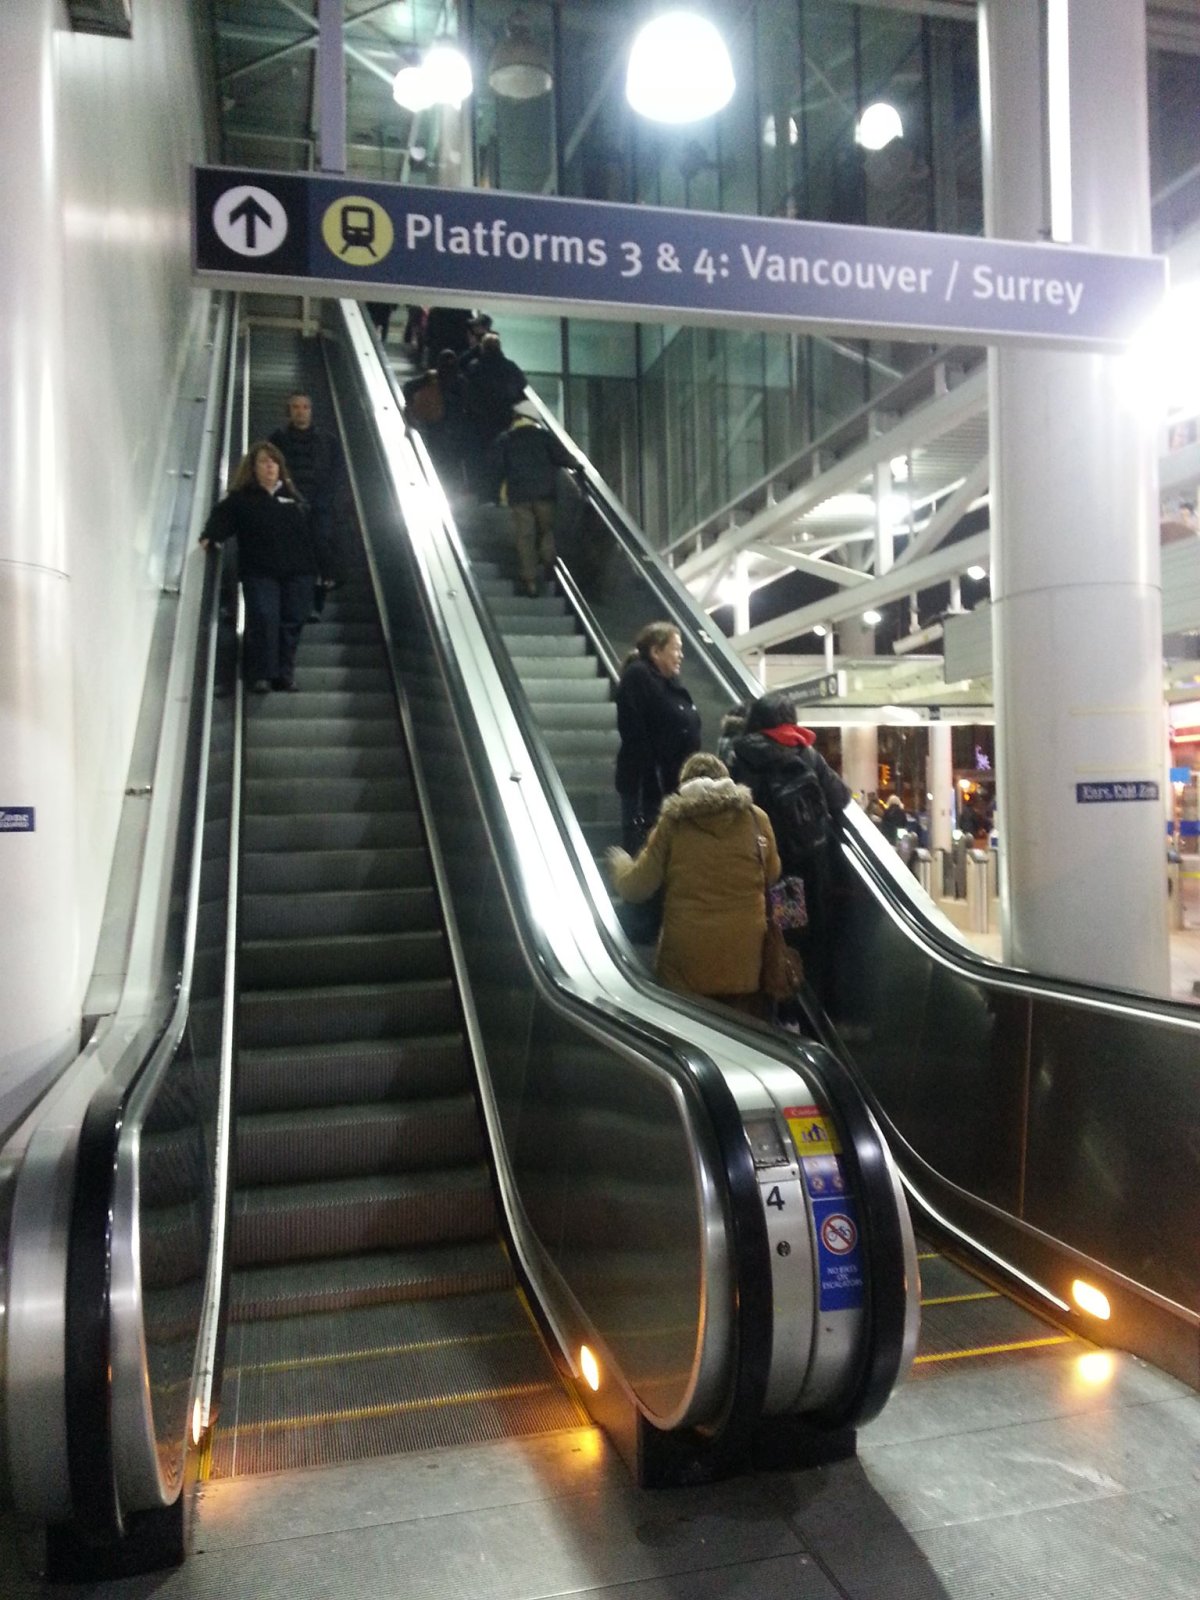 Commercial-Broadway escalator.